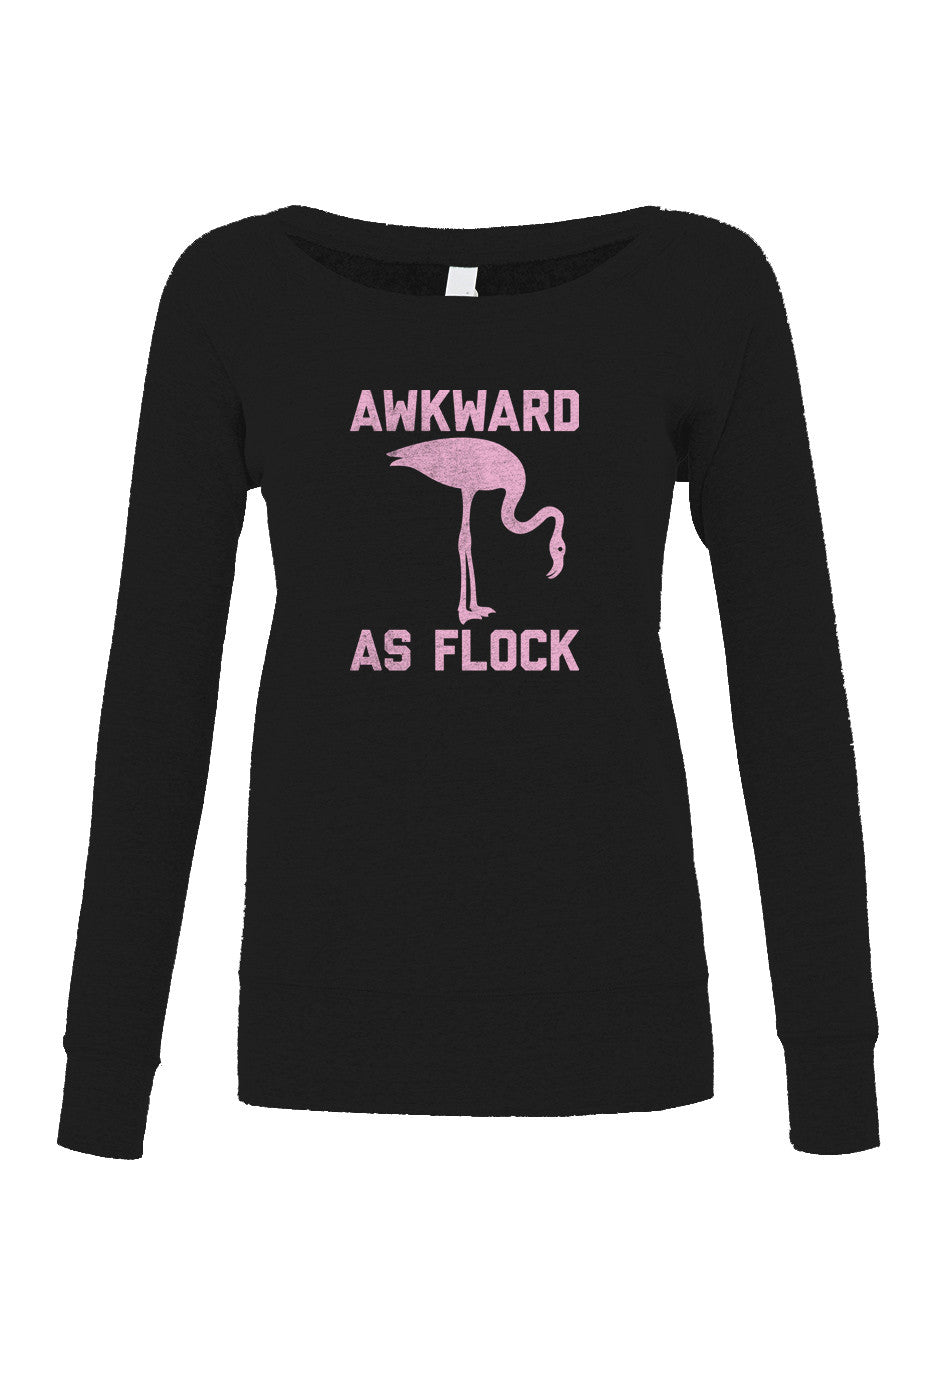 Women's Awkward as Flock Flamingo Scoop Neck Fleece